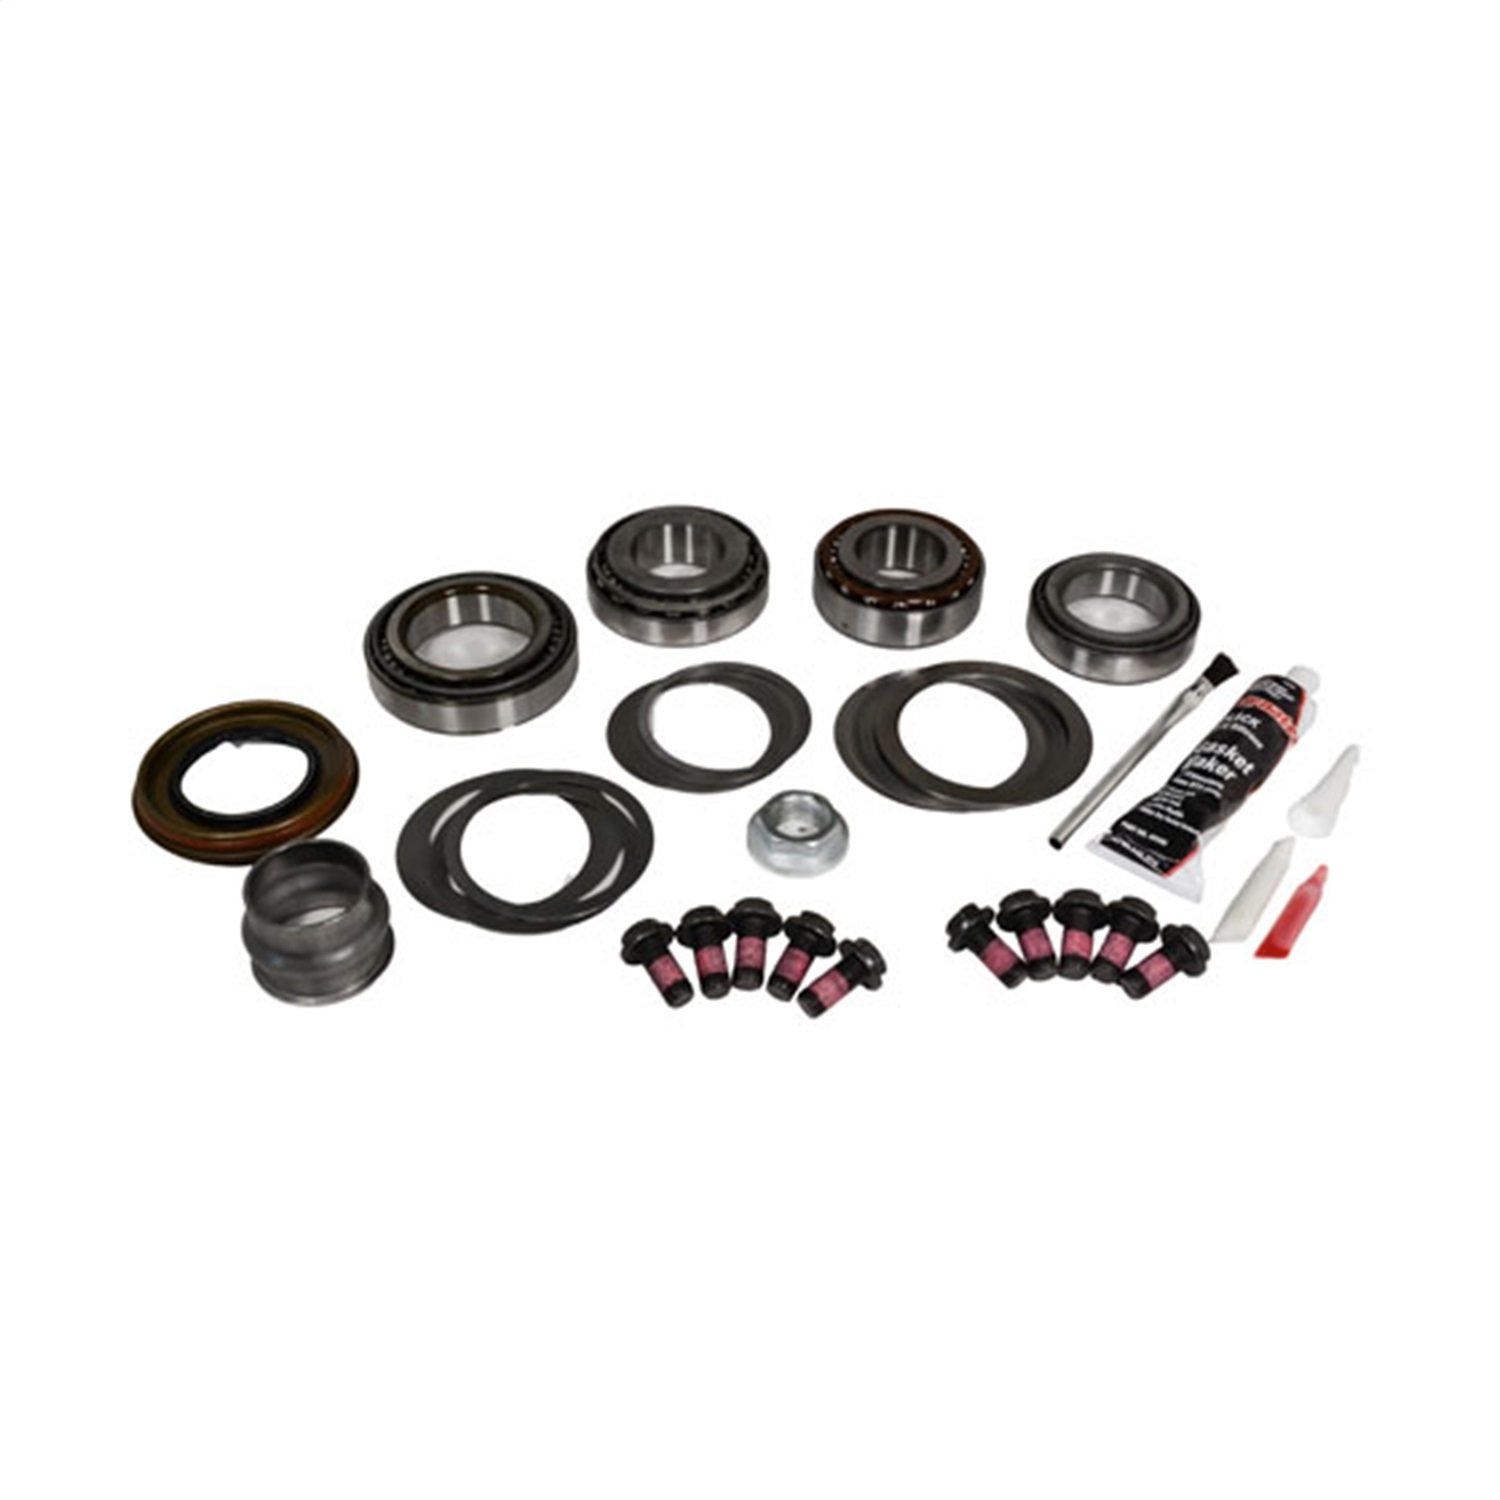 USA Standard 11336 Gear Master Overhaul Kit, For